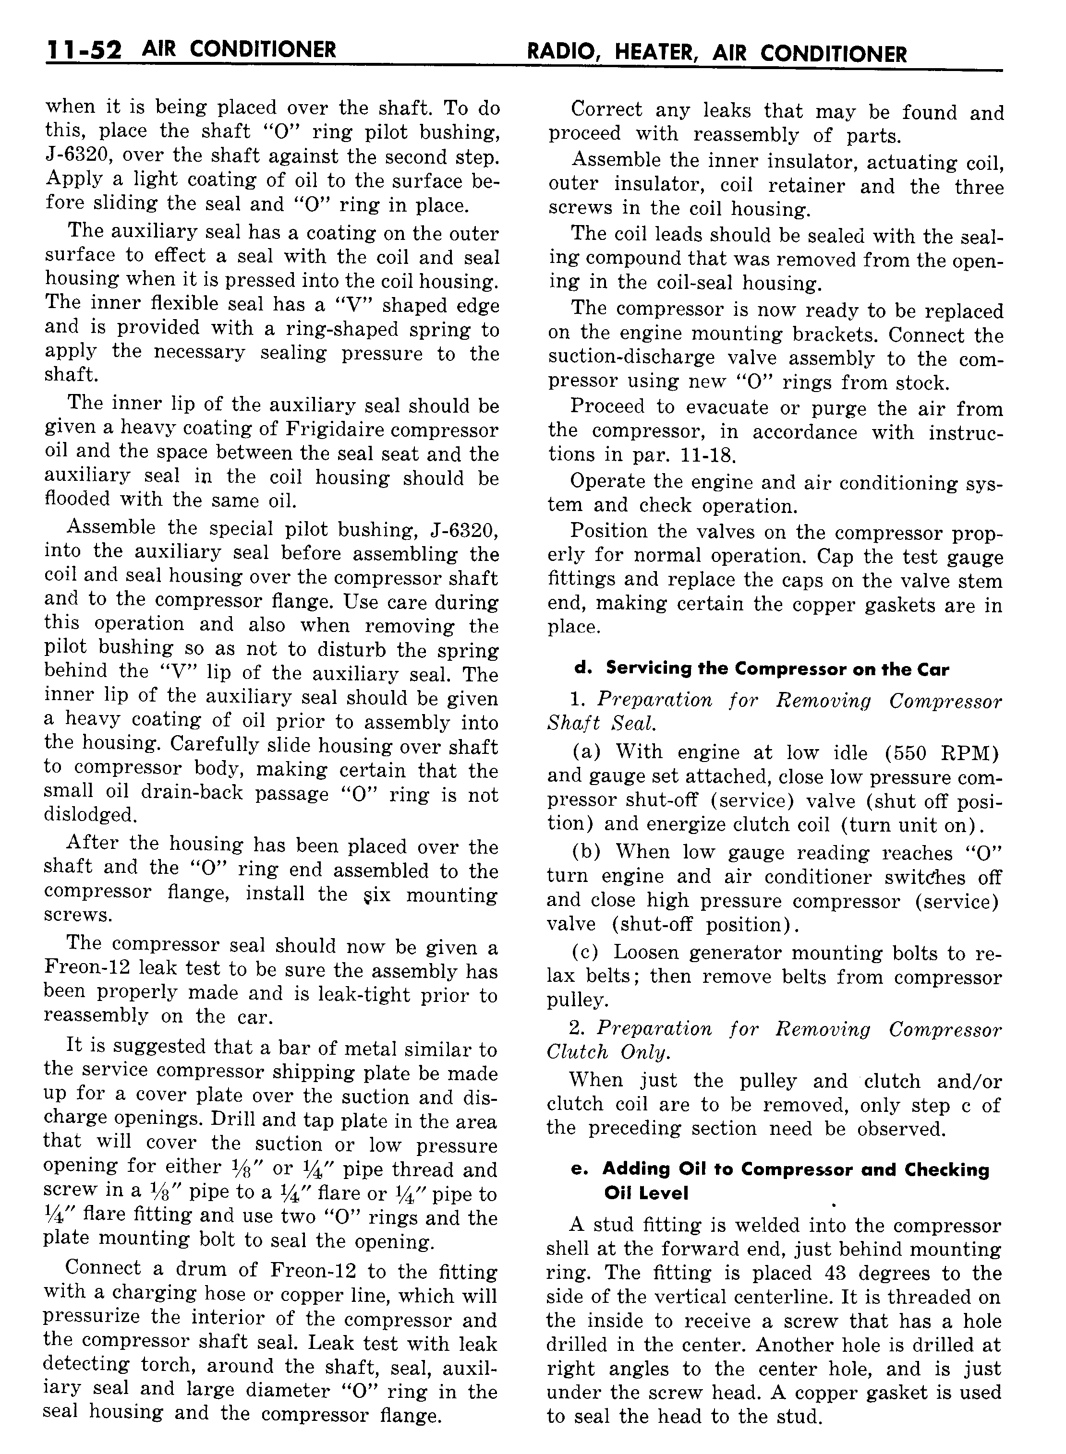 n_12 1960 Buick Shop Manual - Radio-Heater-AC-052-052.jpg